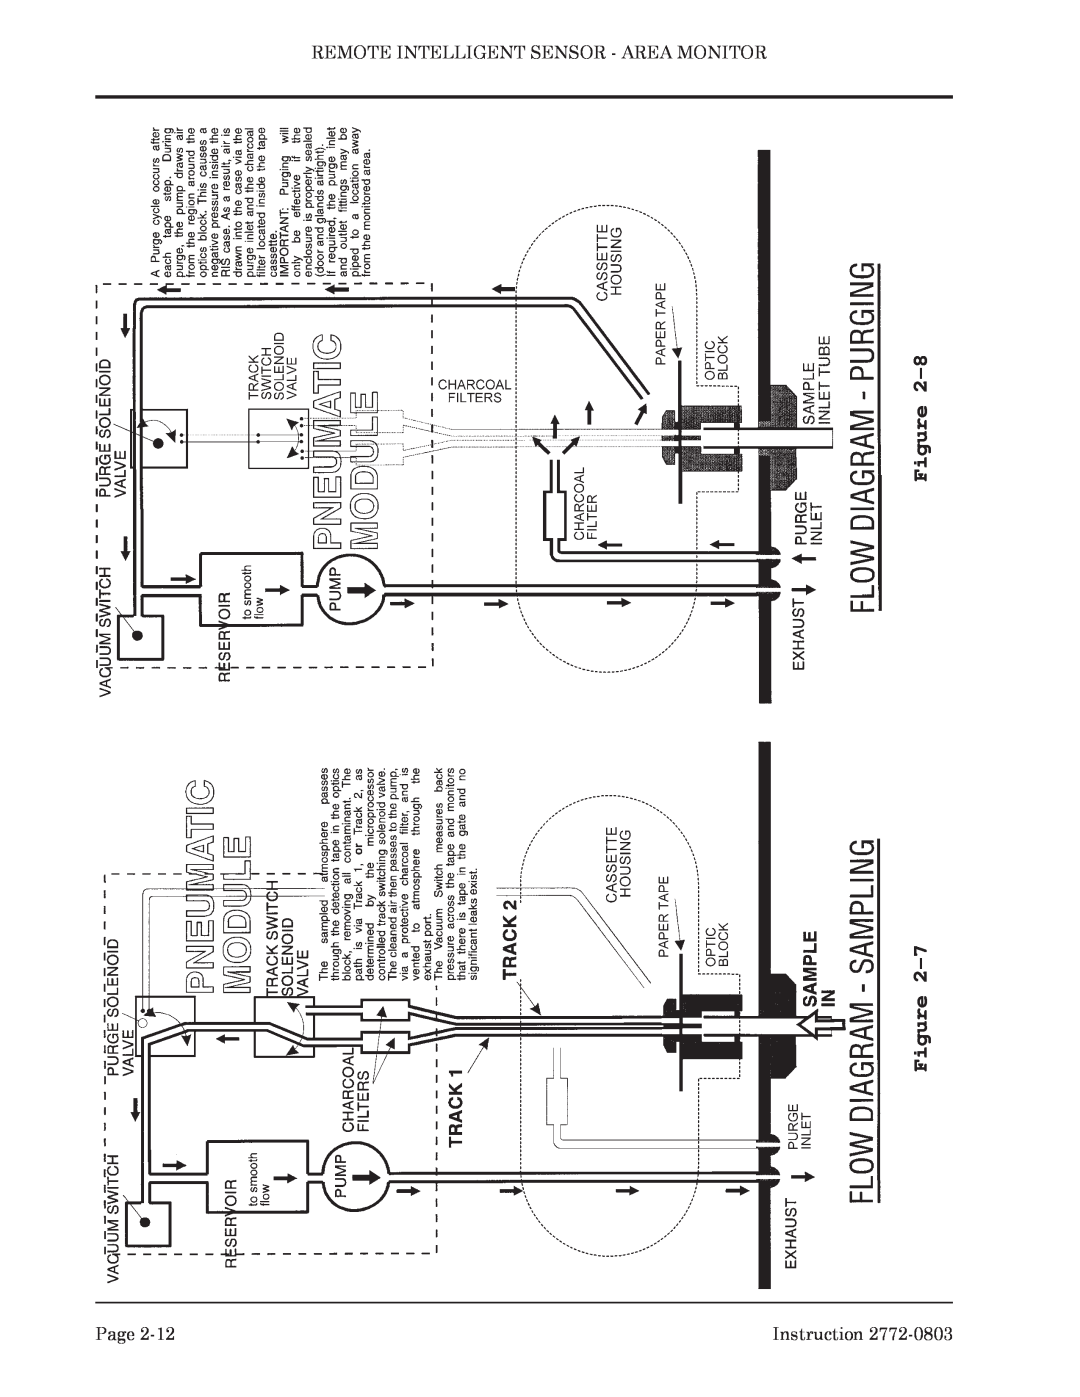 Bacharach 2772-0803 manual Remote Intelligent Sensor - Area Monitor, Page, Instruction 